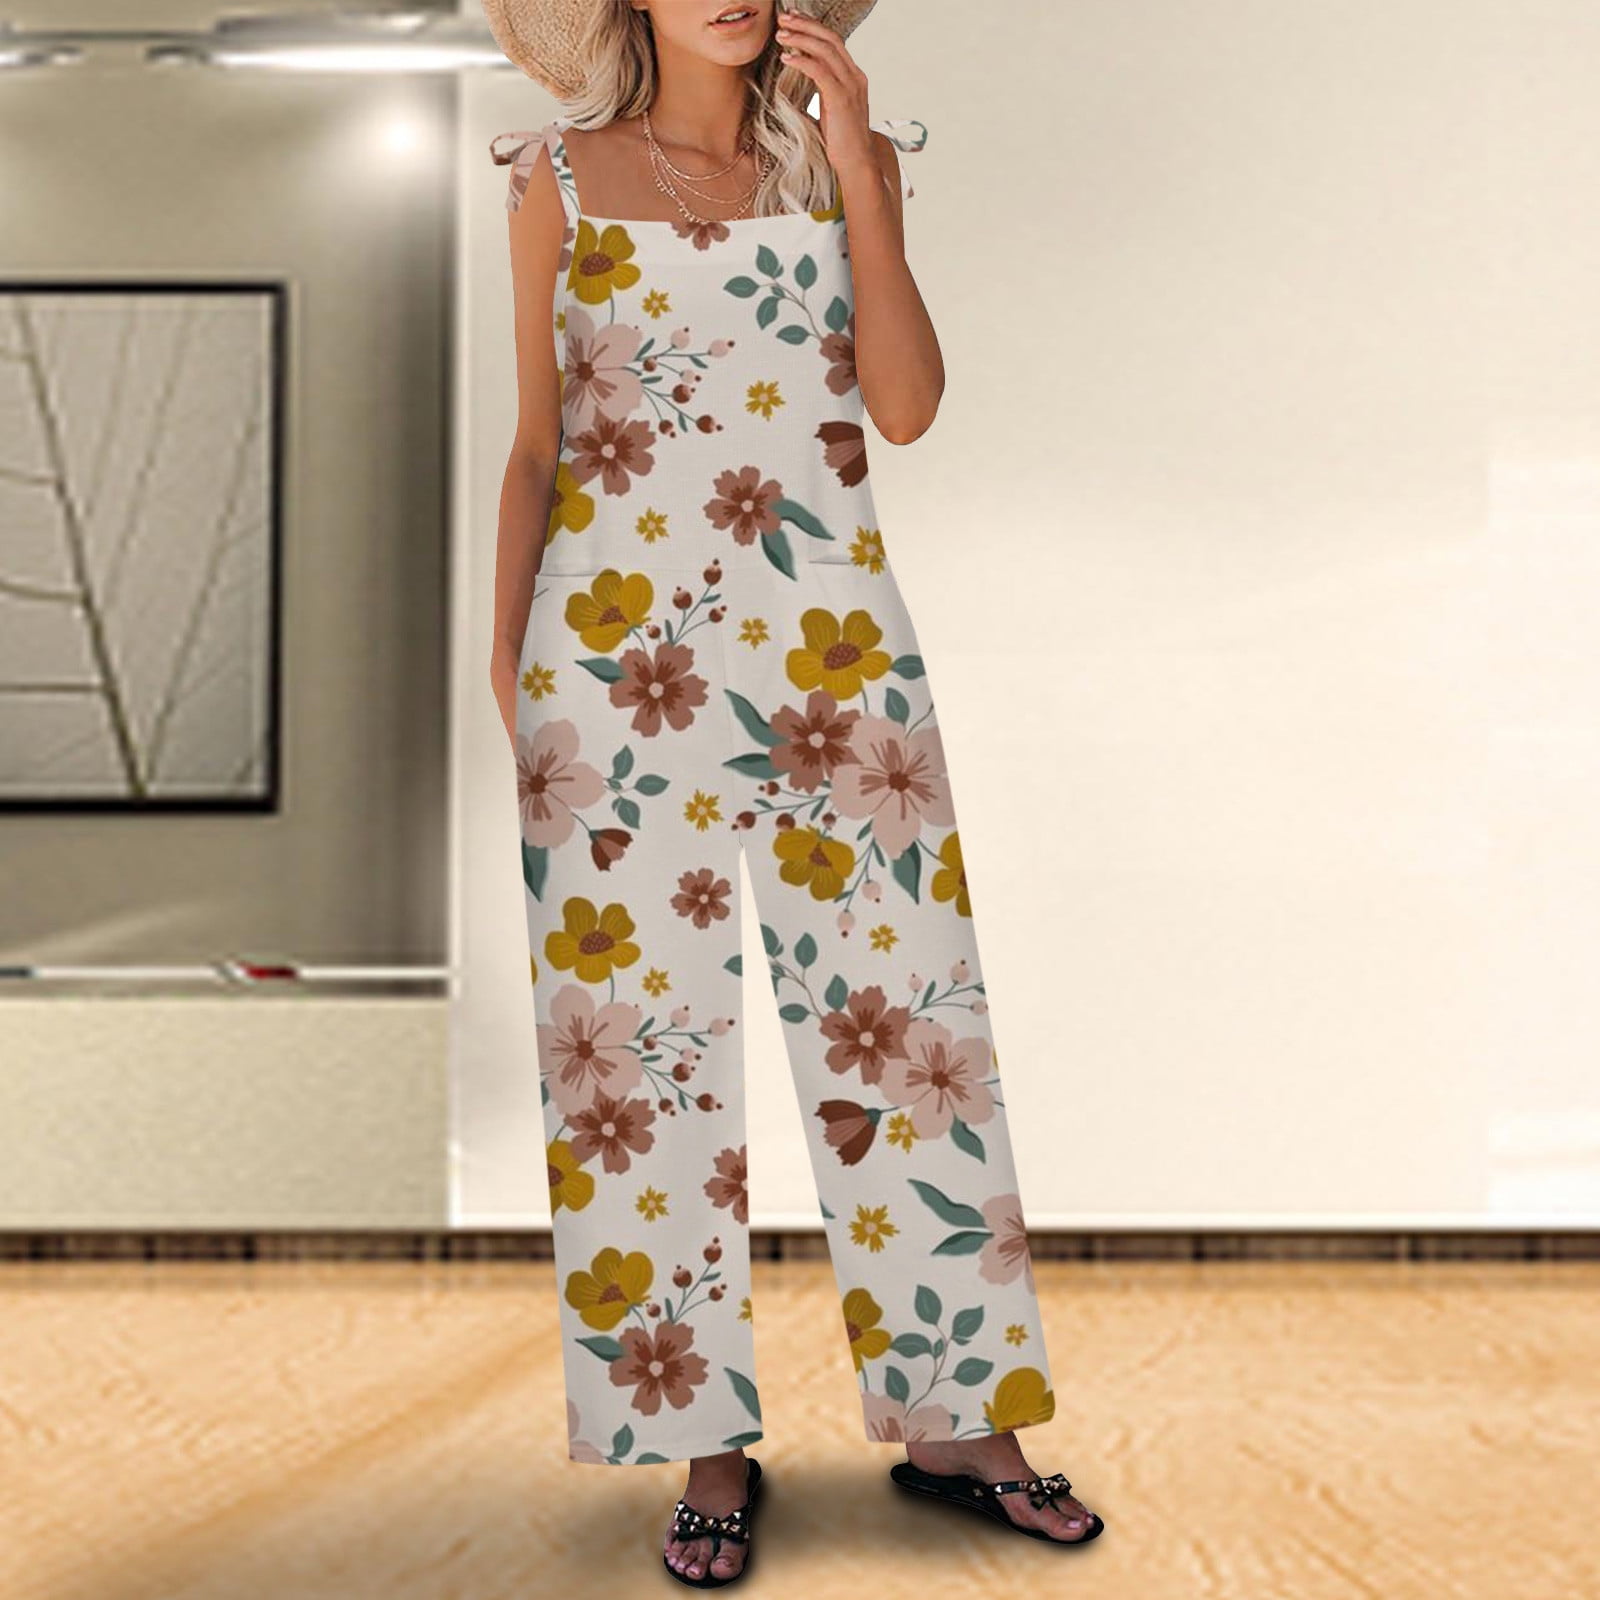 Imported Laceup Floral Print Romper Jumpsuit